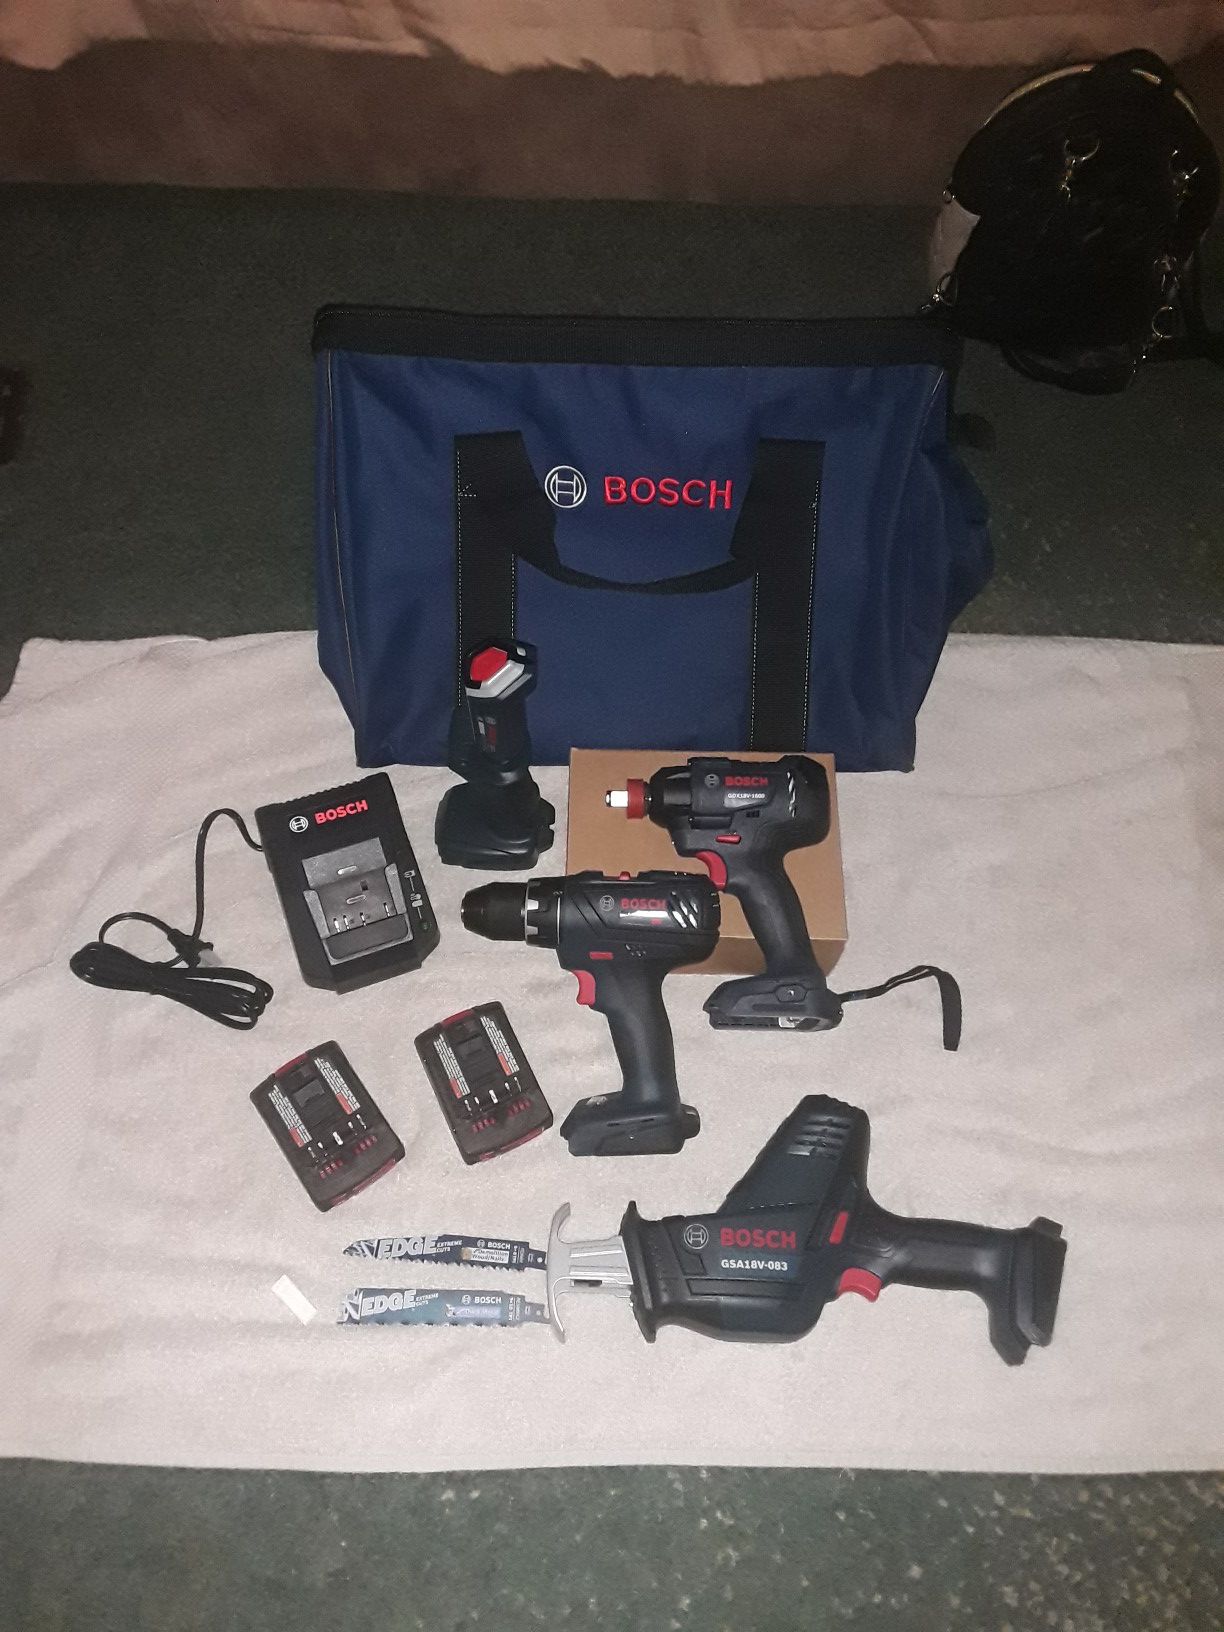 Bosch 4 tool combo kit